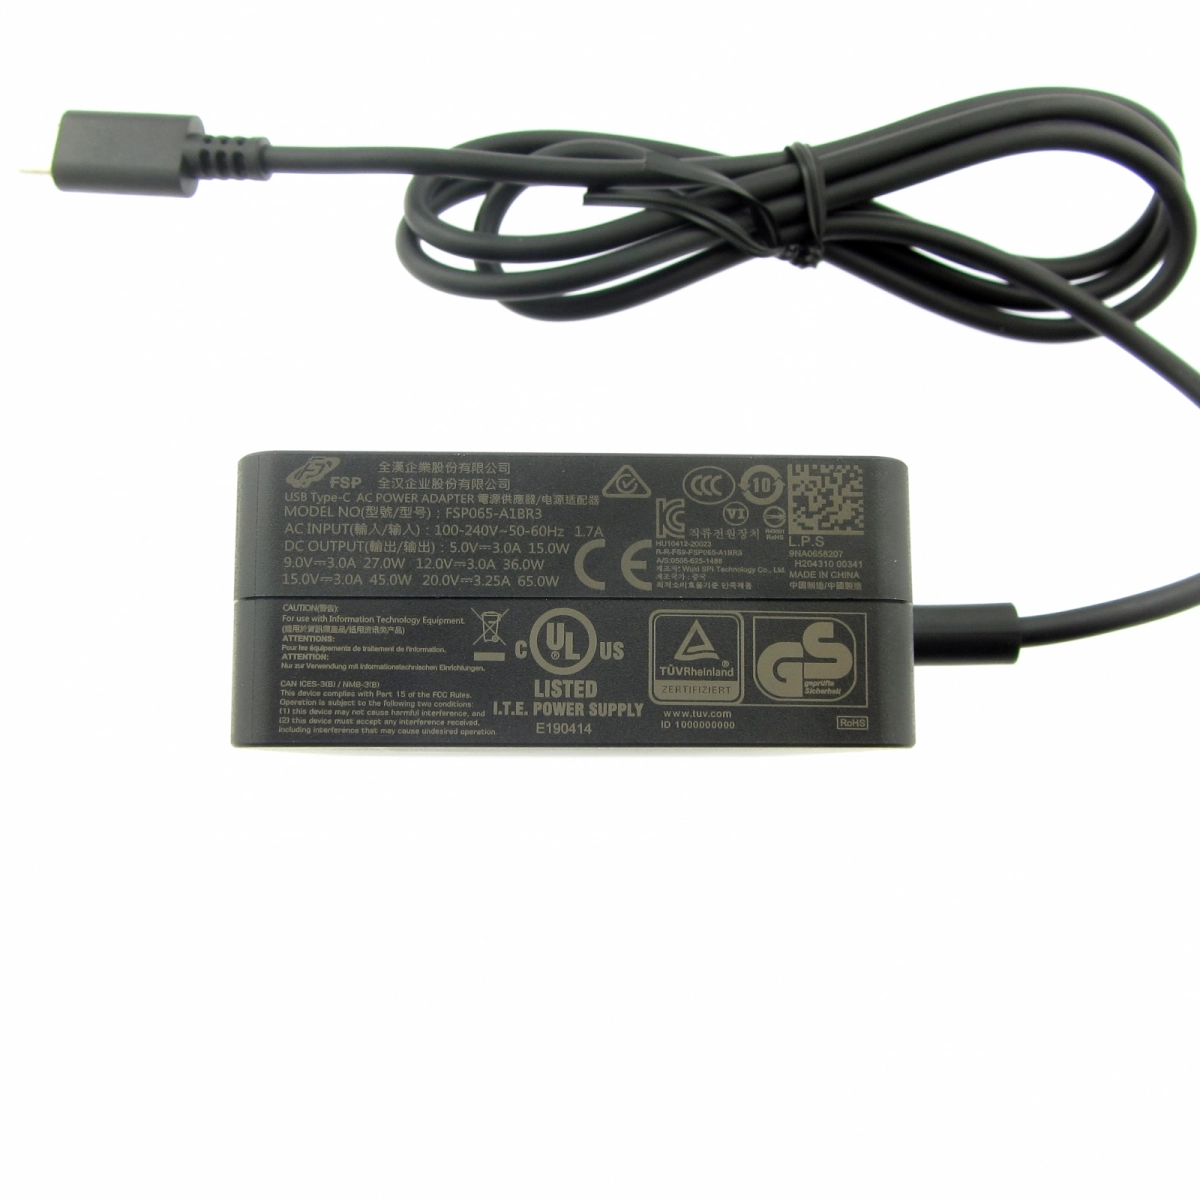 Original Netzteil für FSP FSP065-A1BR3, 20V, 3.25A, Stecker USB-C, 65W